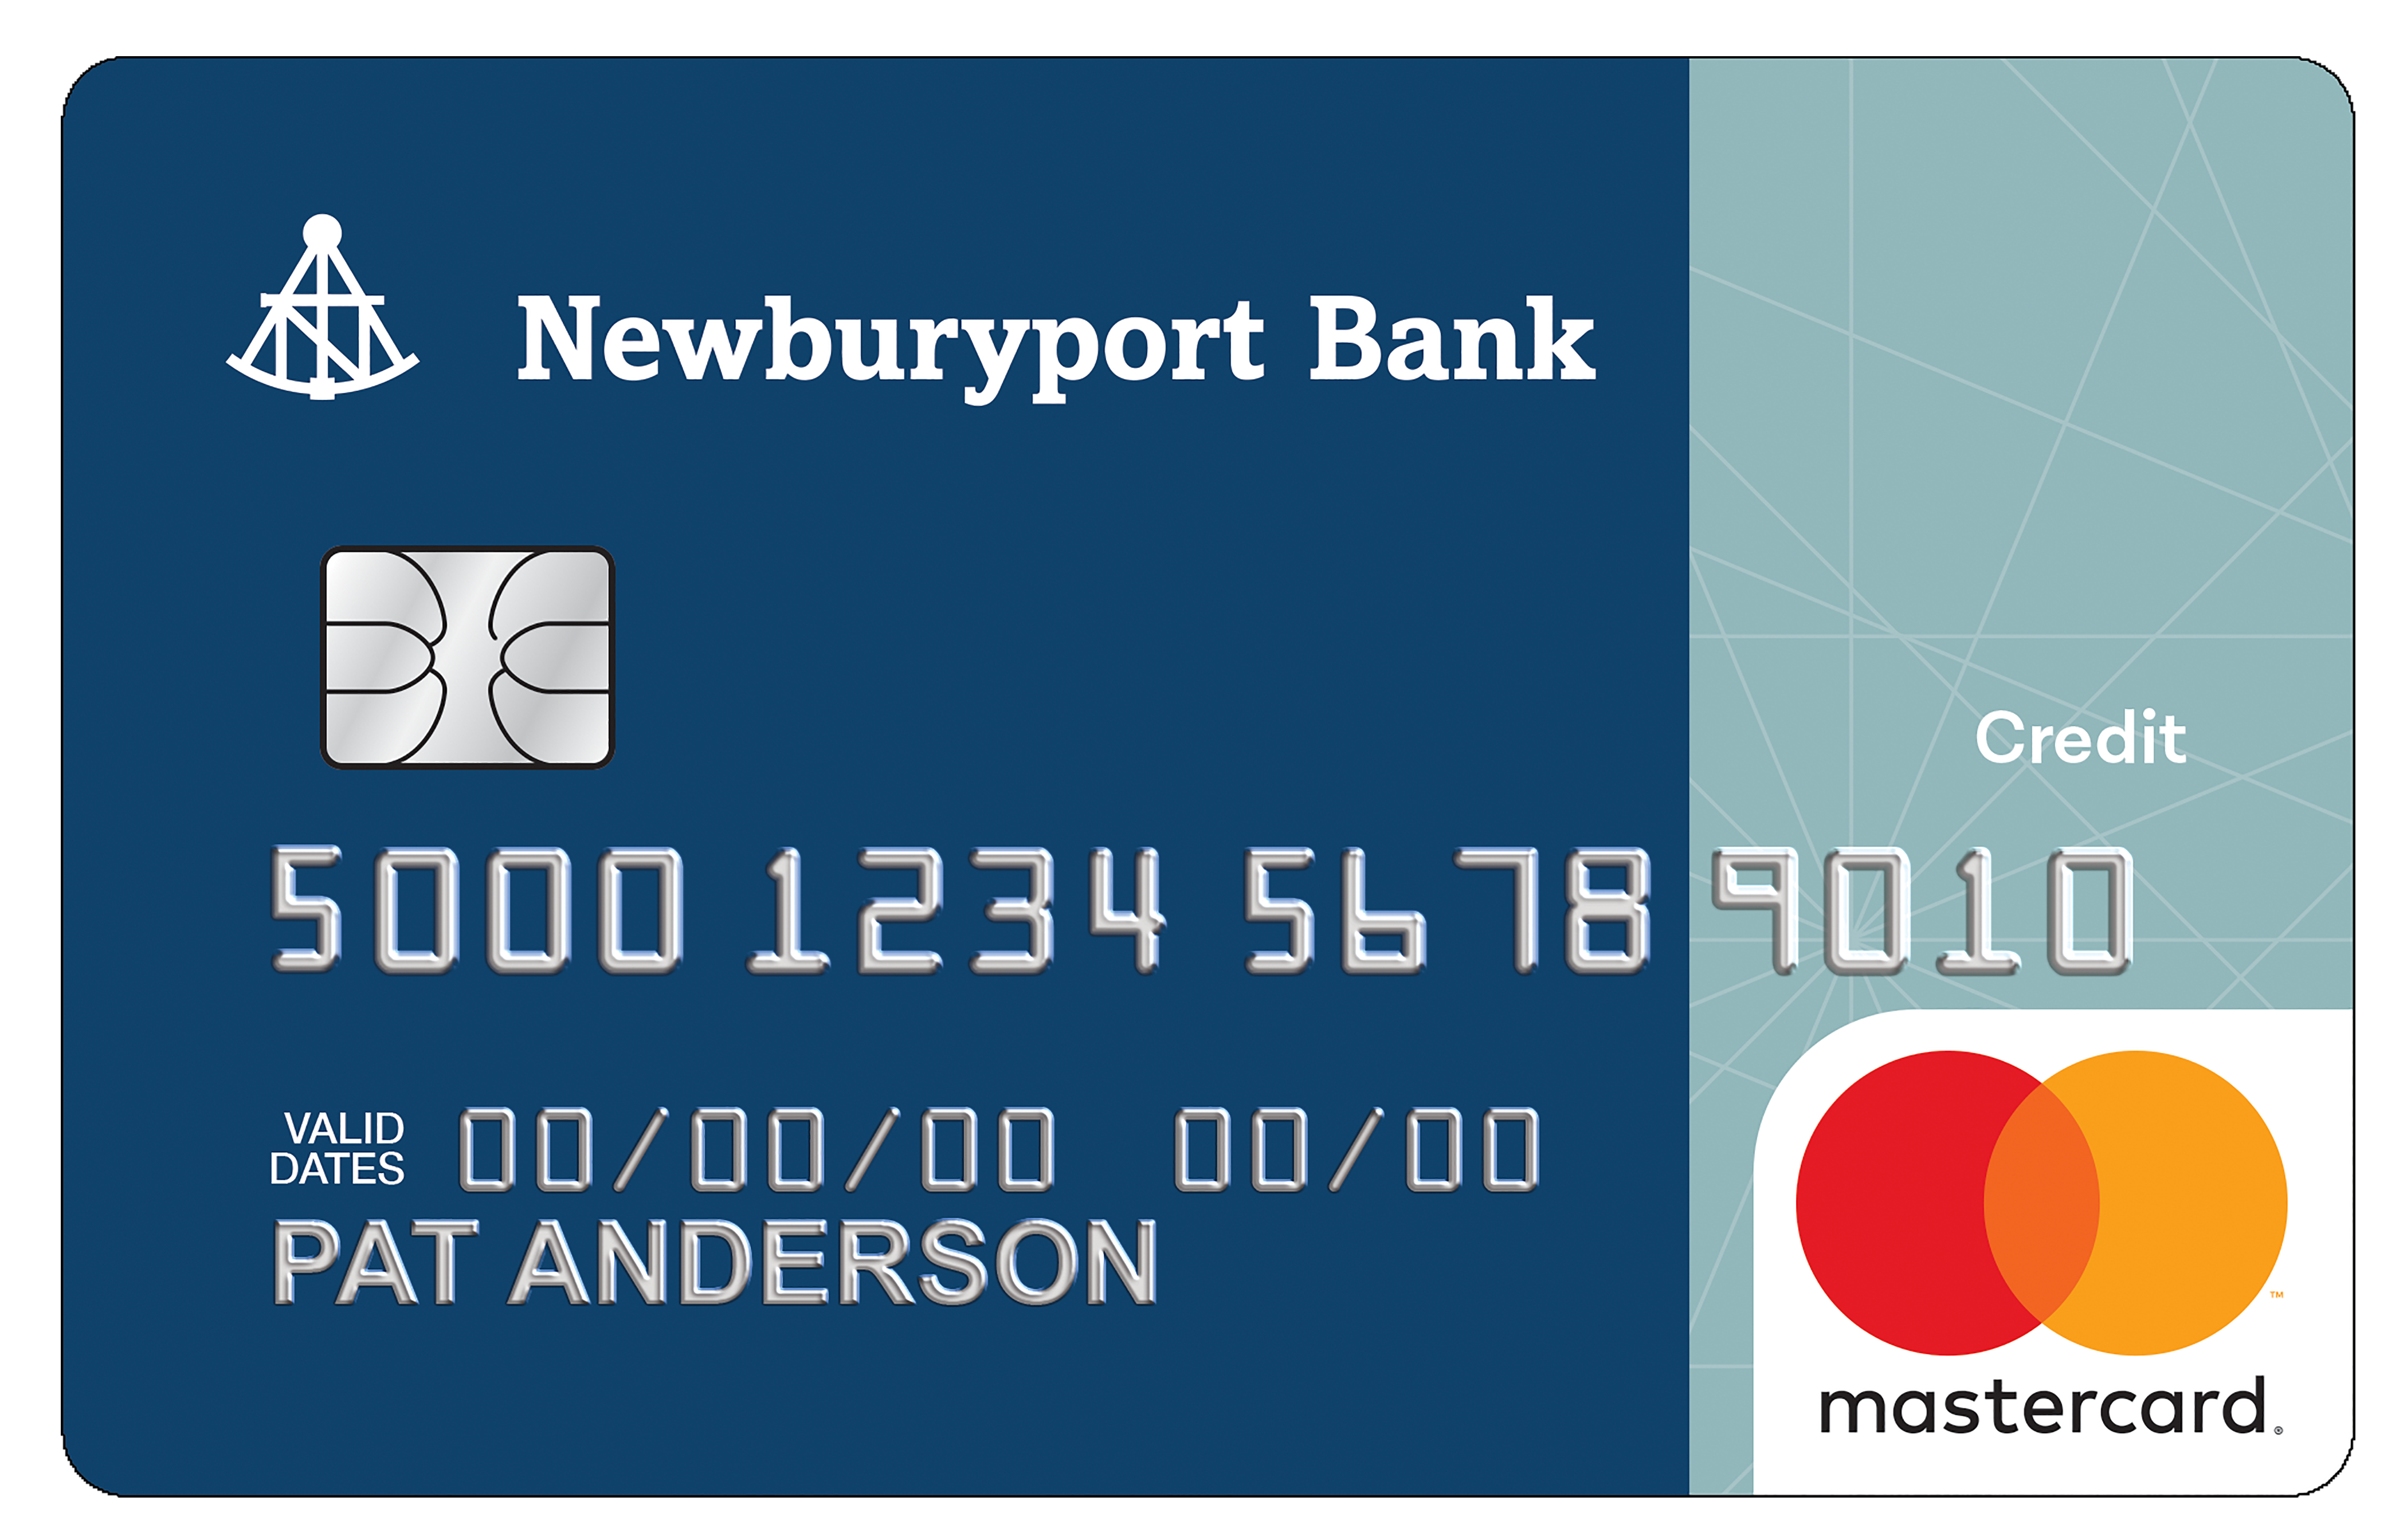 Newburyport Five Cents Savings Bank College Real Rewards Card